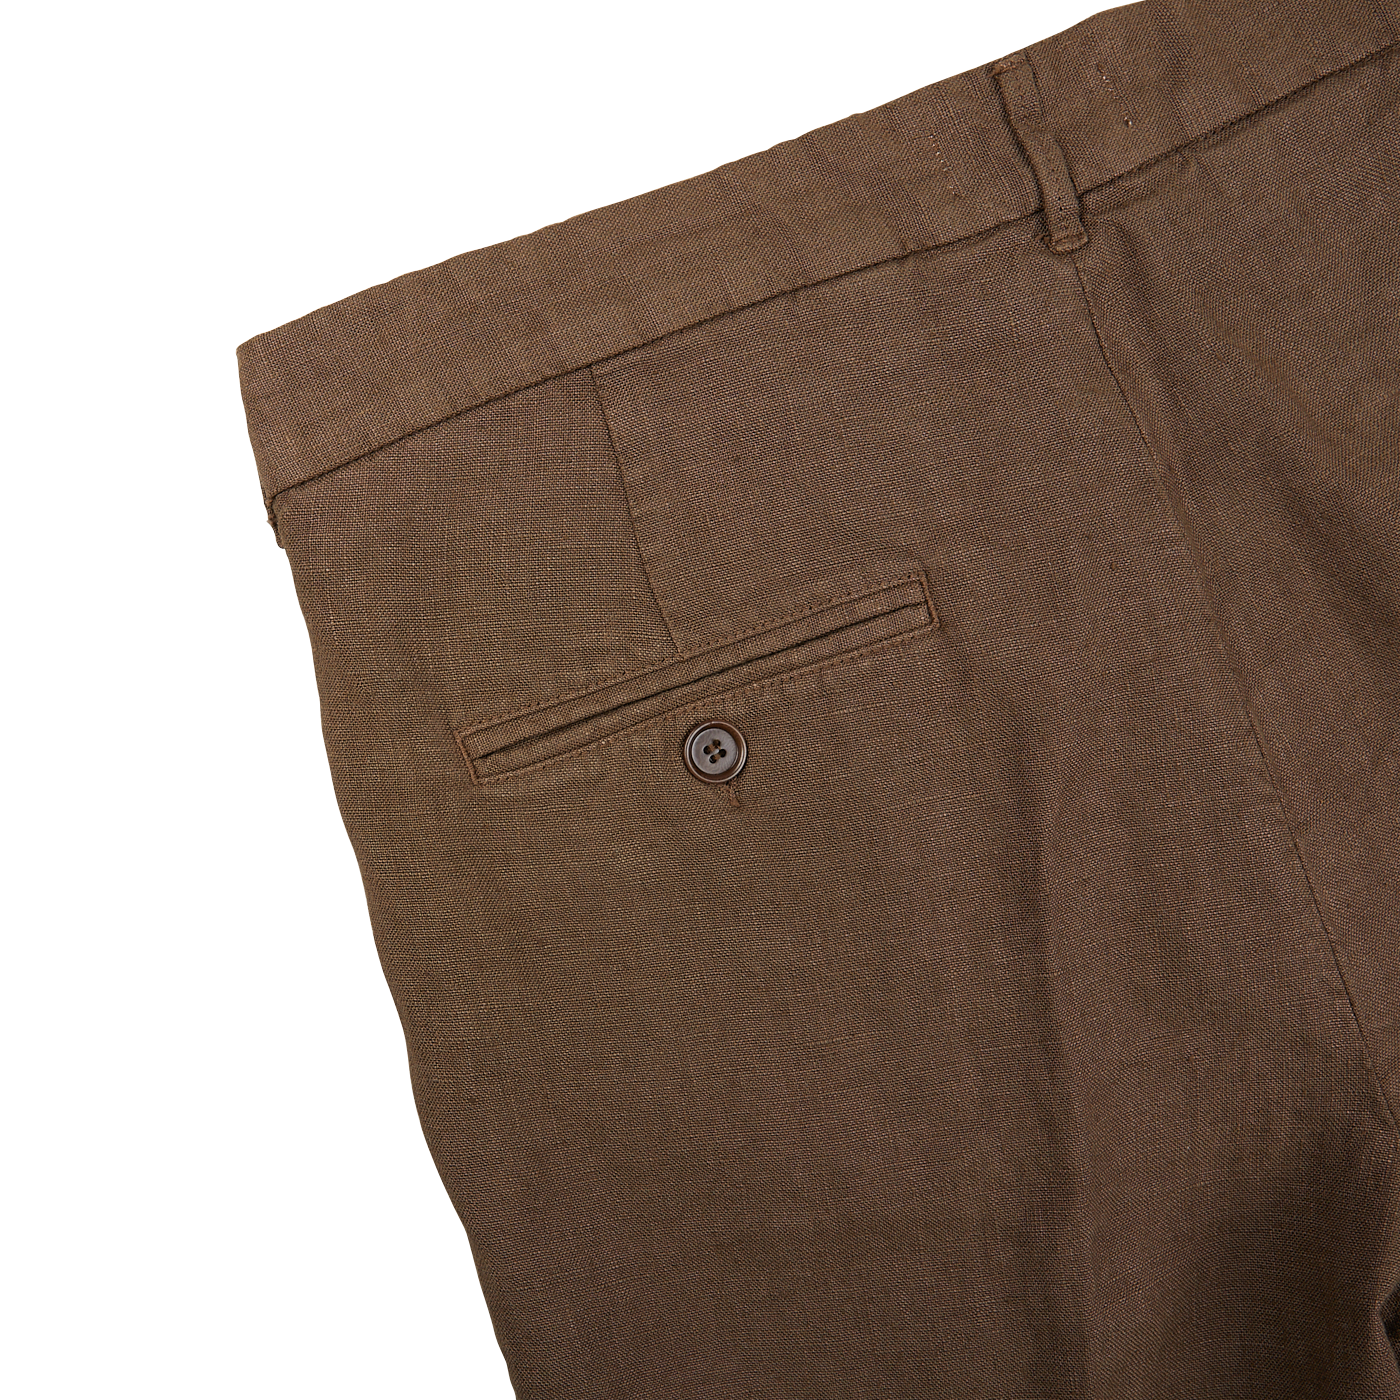 A close up of Tela Genova Brown Linen Damasco Pleated Shorts.